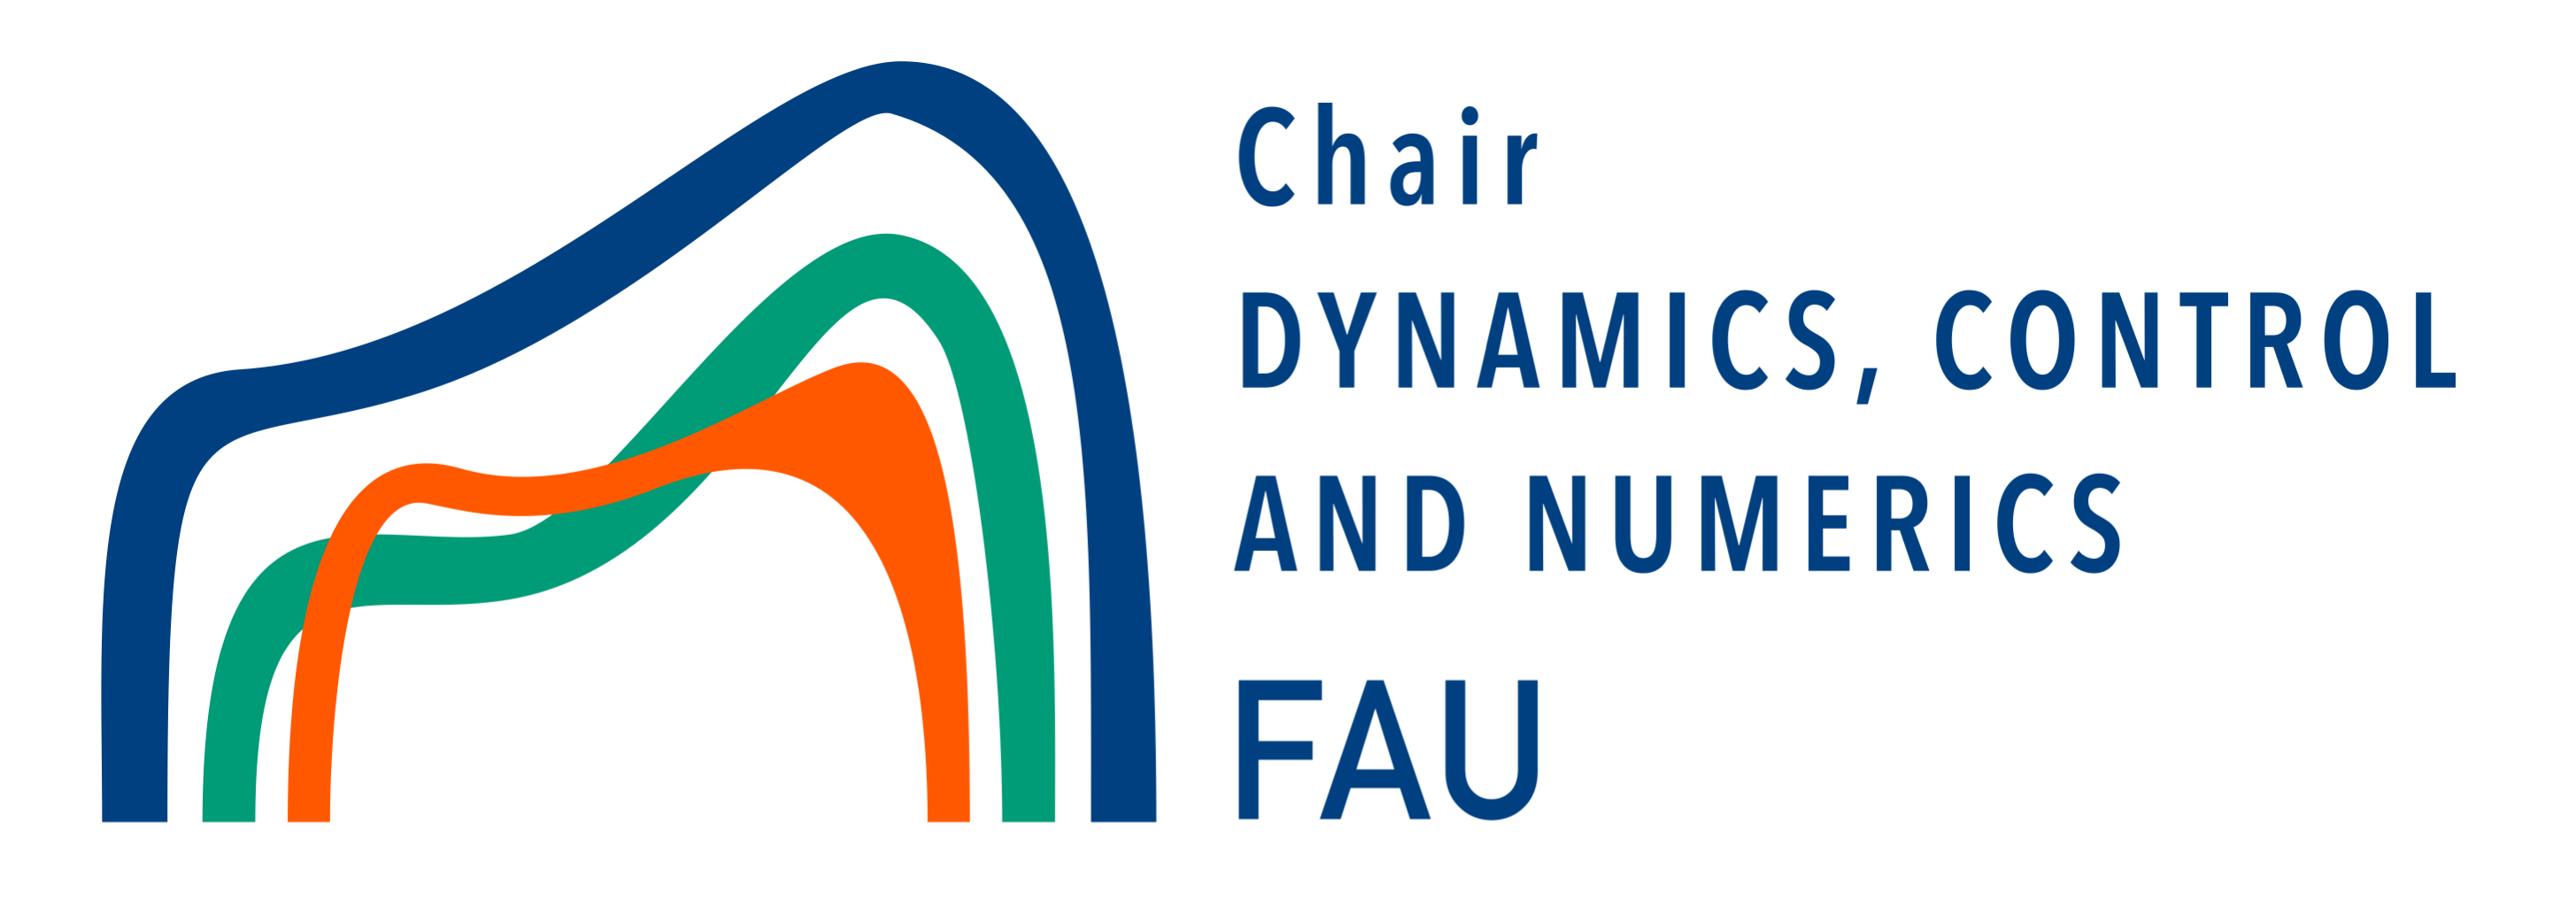 FAU Chair for Dynamics, Control and Numerics - AvH